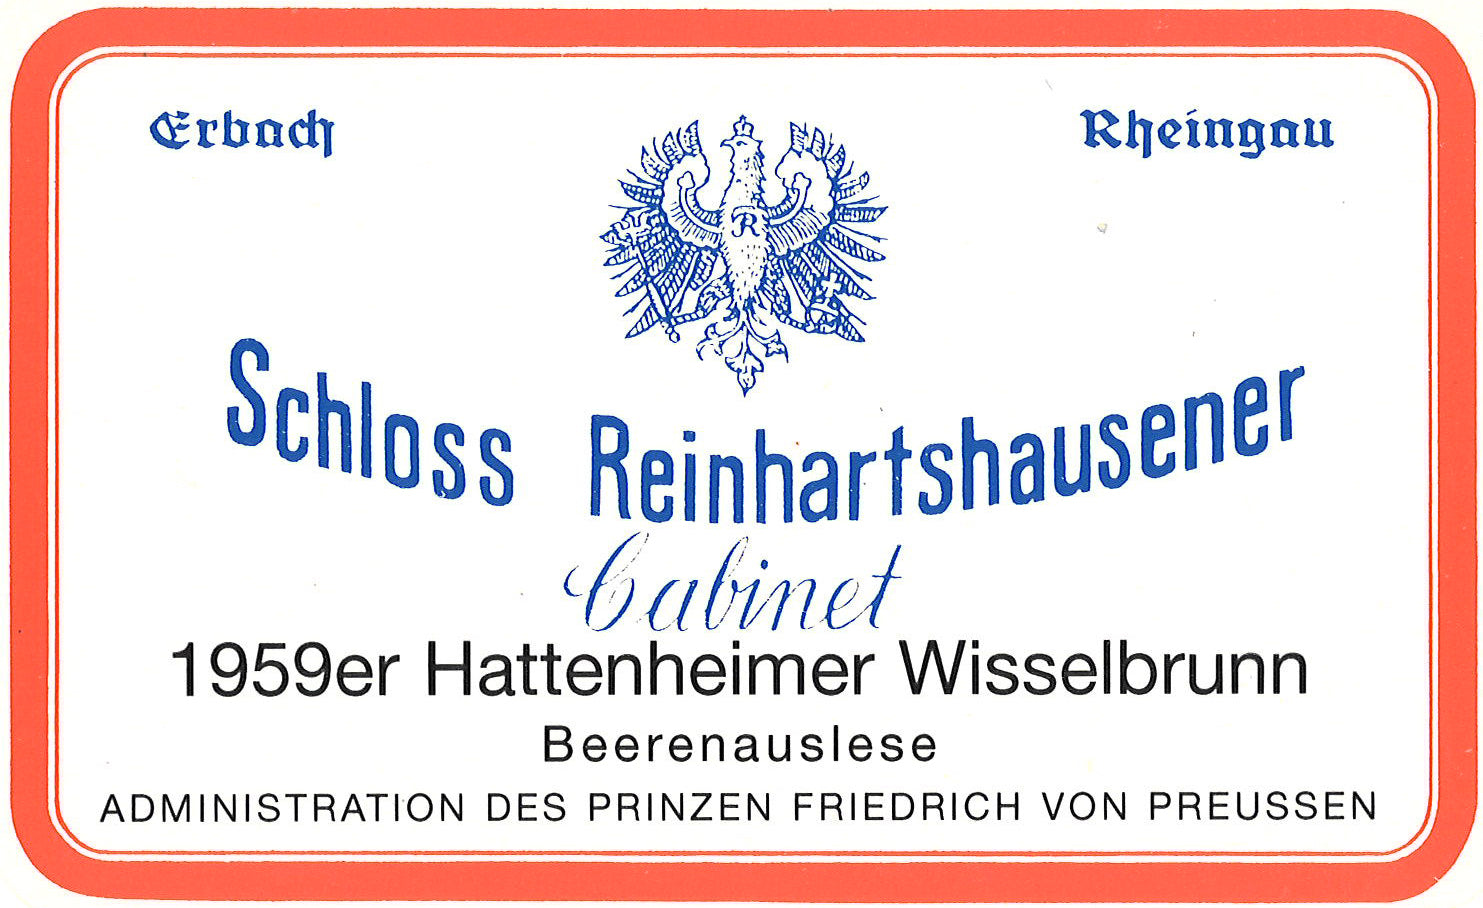 Schloss Reinhartshausen 1959 er Hattenheimer Wisselbrunn Beerenauslese